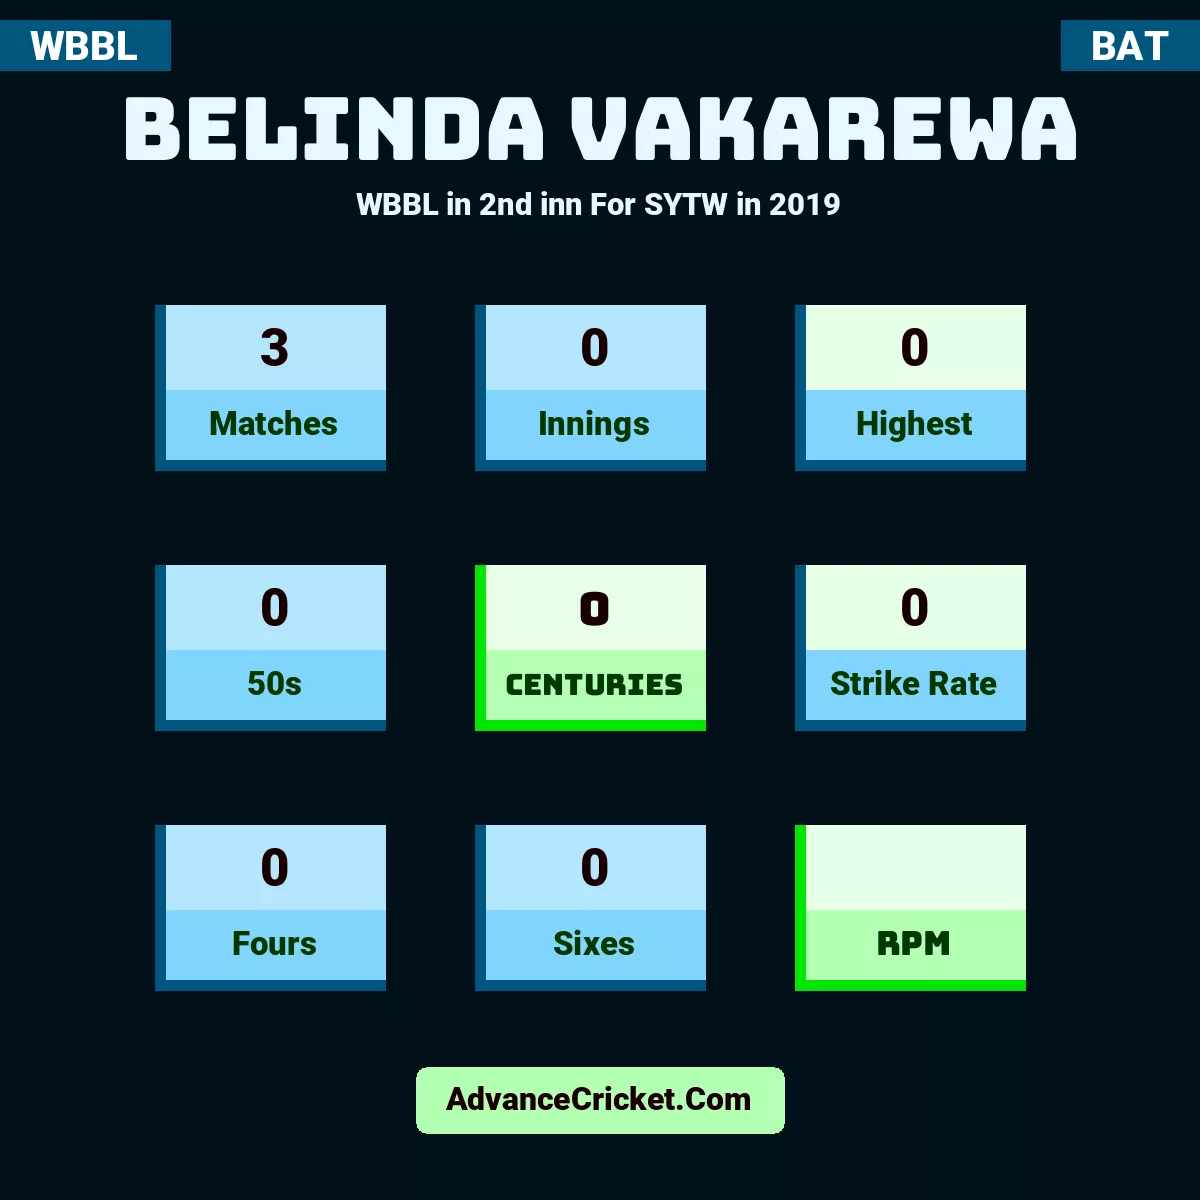 Belinda Vakarewa WBBL  in 2nd inn For SYTW in 2019, Belinda Vakarewa played 3 matches, scored 0 runs as highest, 0 half-centuries, and 0 centuries, with a strike rate of 0. B.Vakarewa hit 0 fours and 0 sixes.